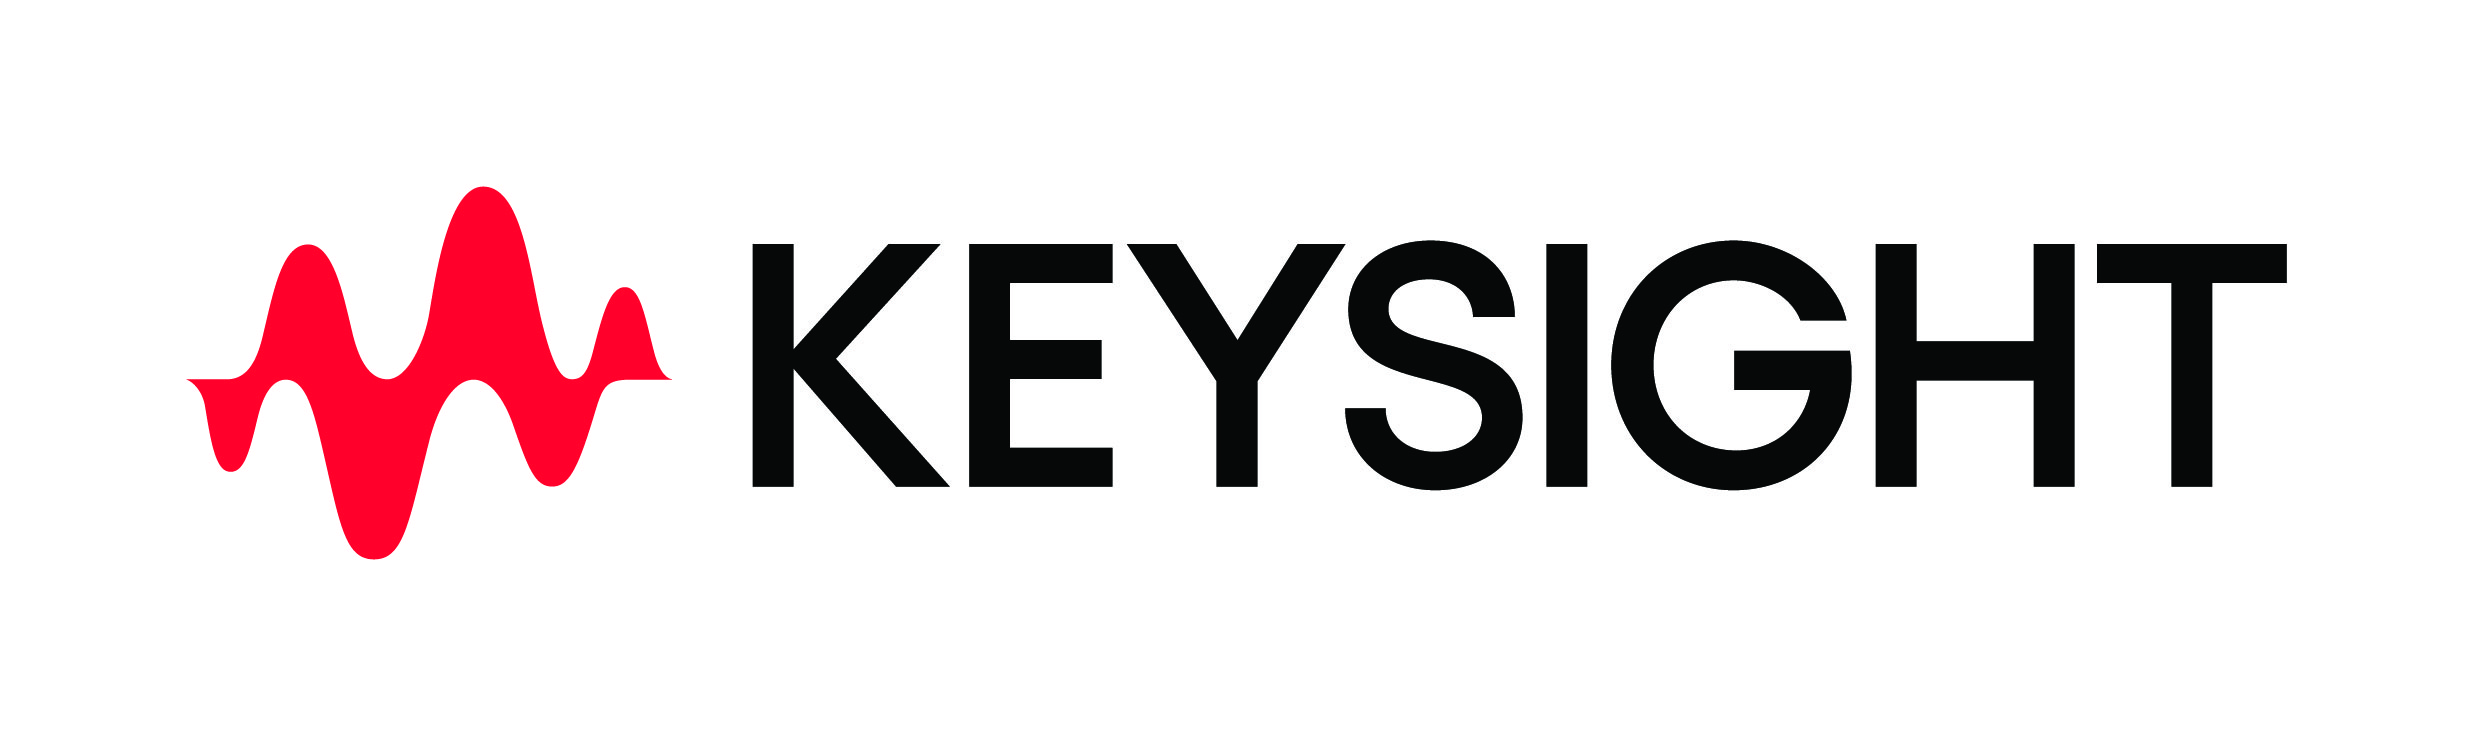 Keysight-Horizontal-Logo